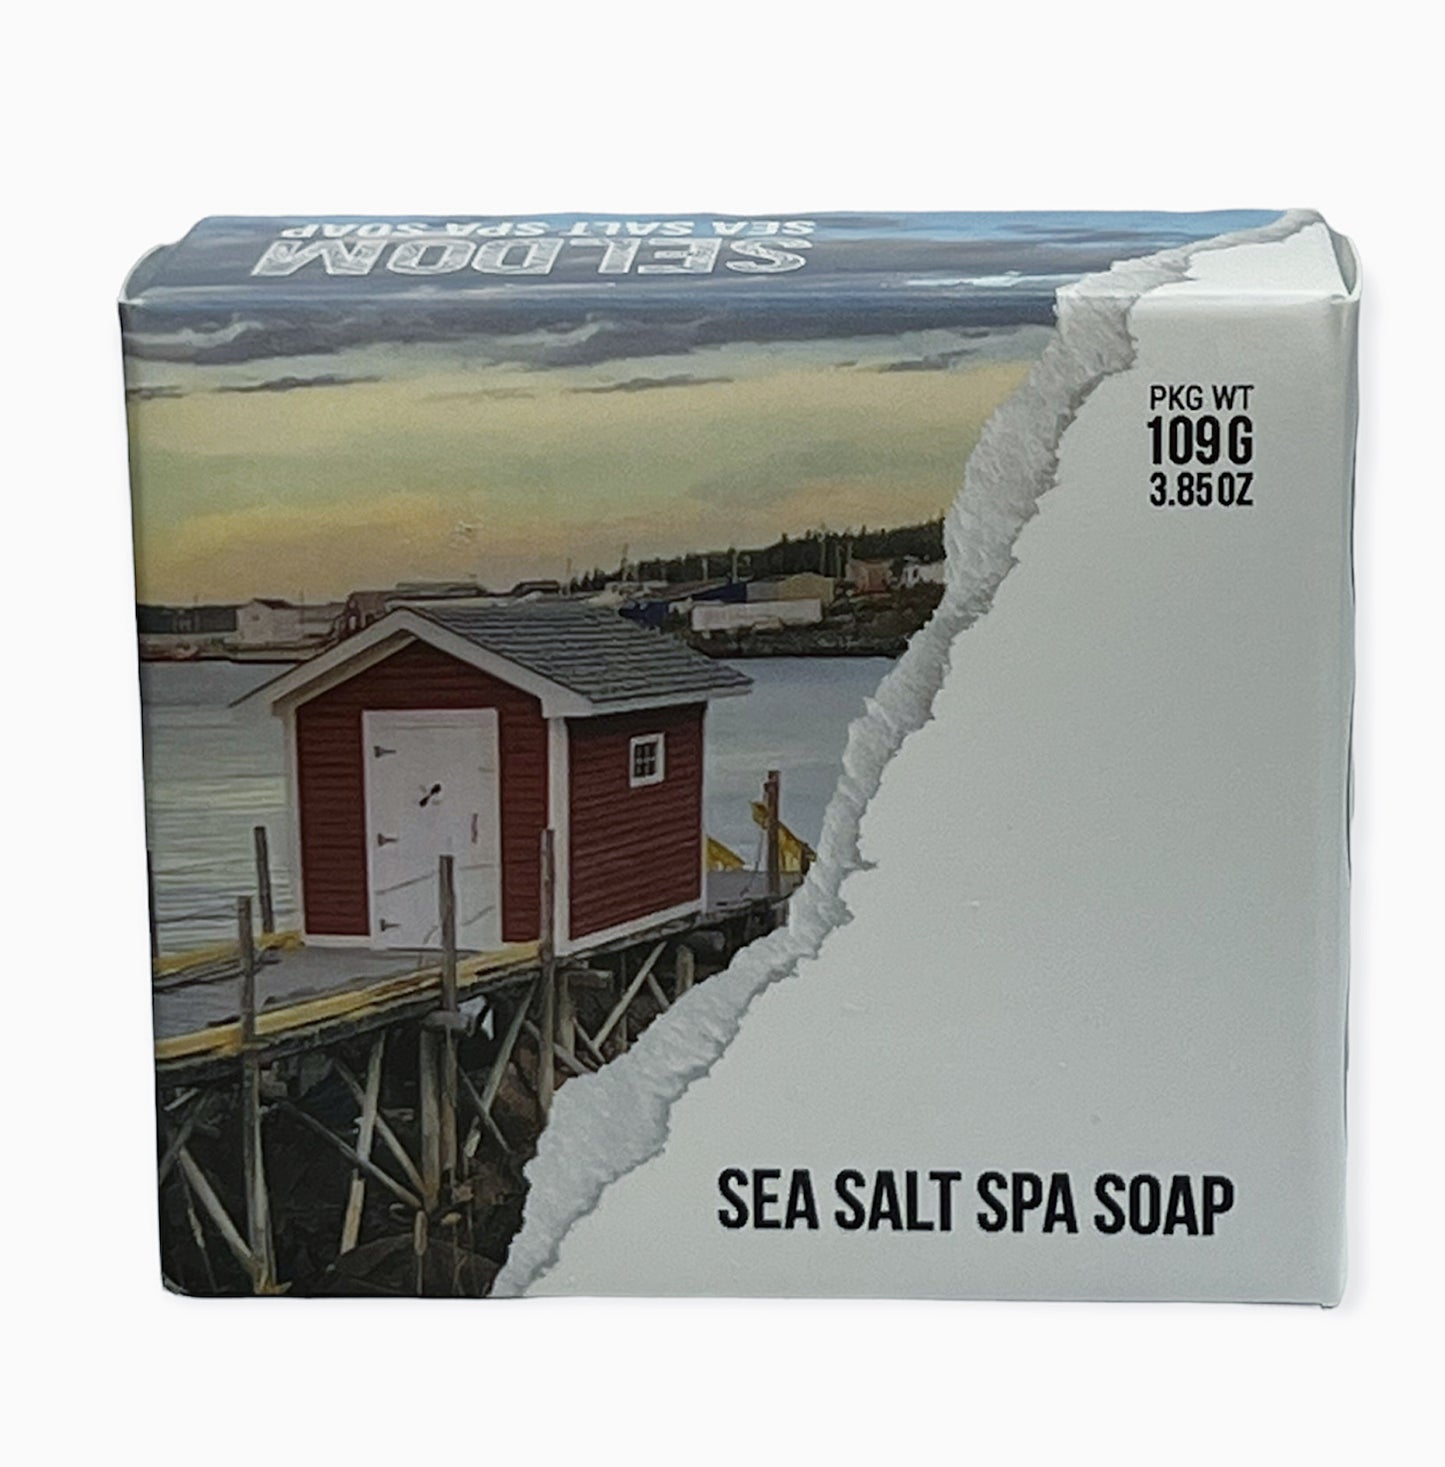 Seldom Sea Salt Spa Soap